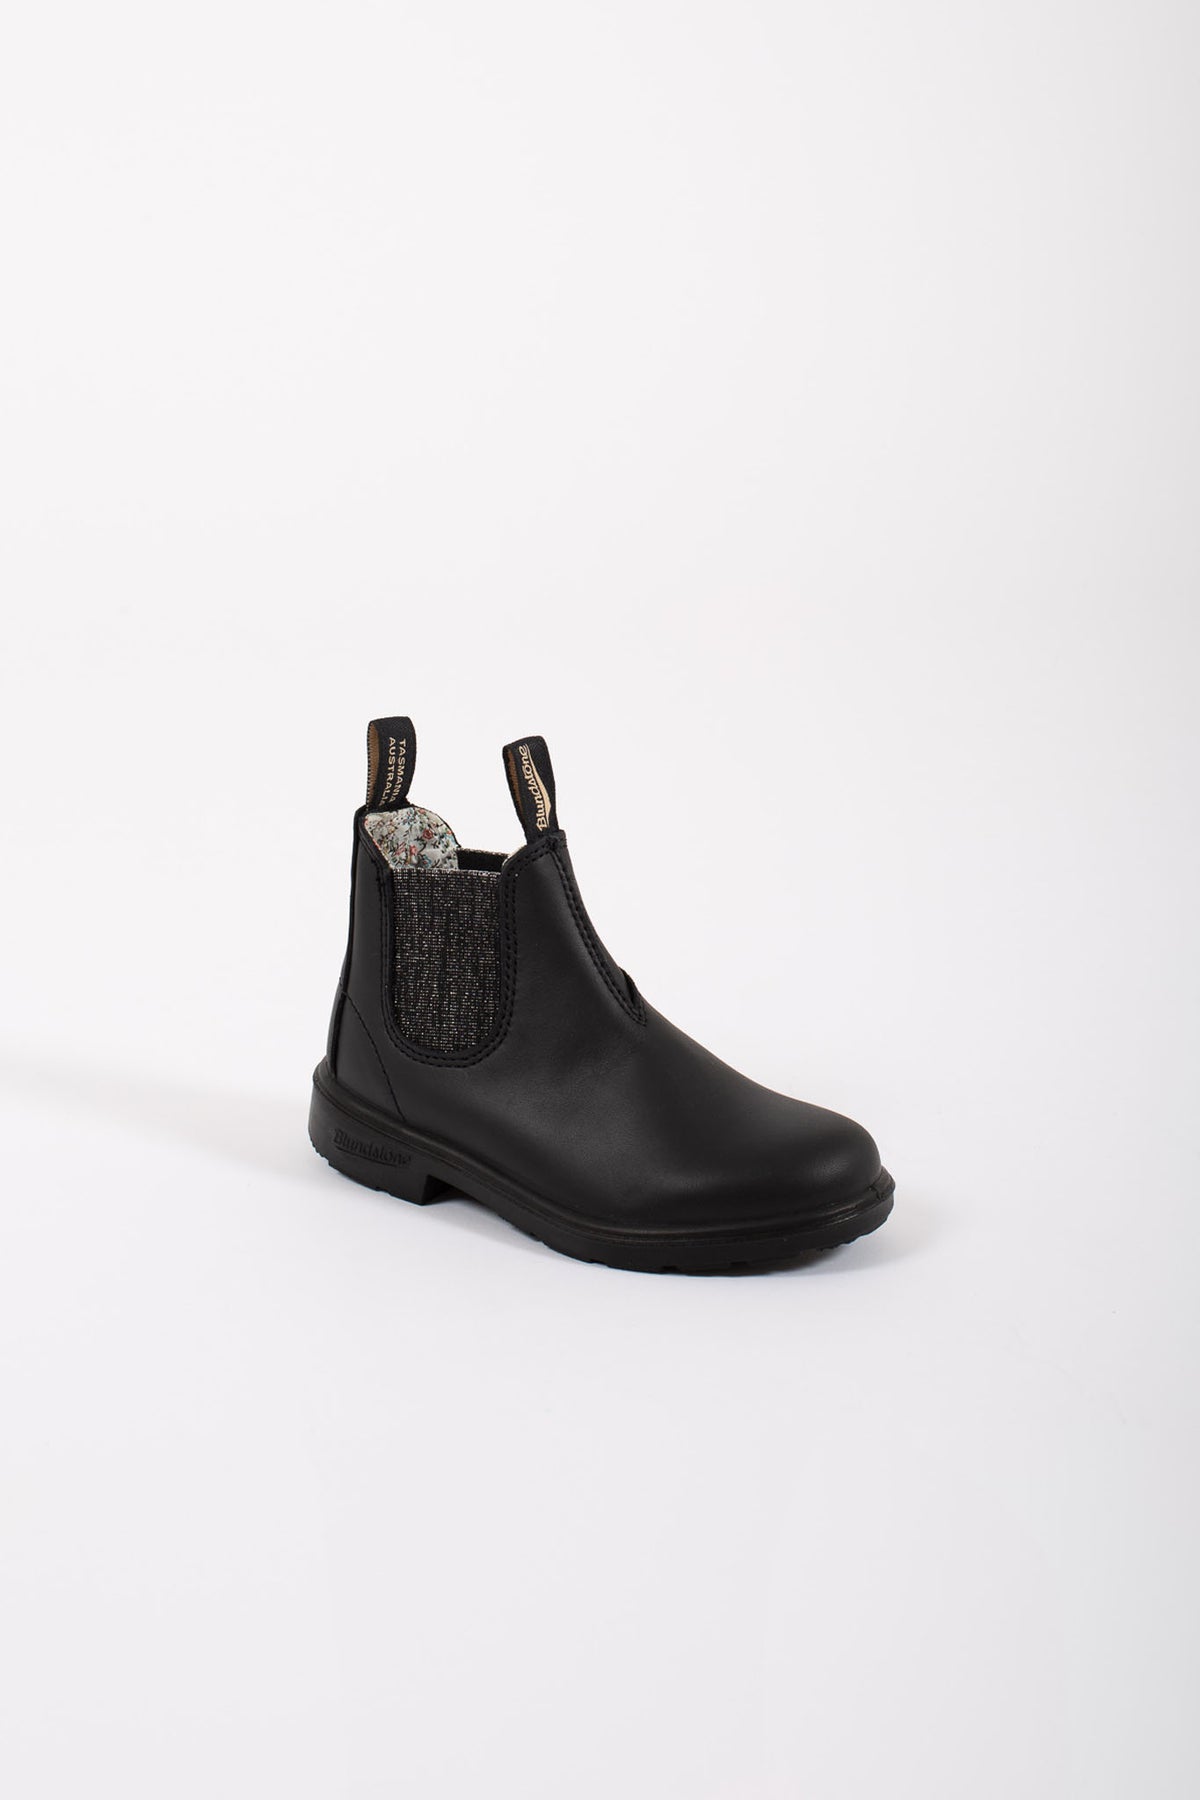 Blundstone Boot Black Leather Nero Bambina - 2